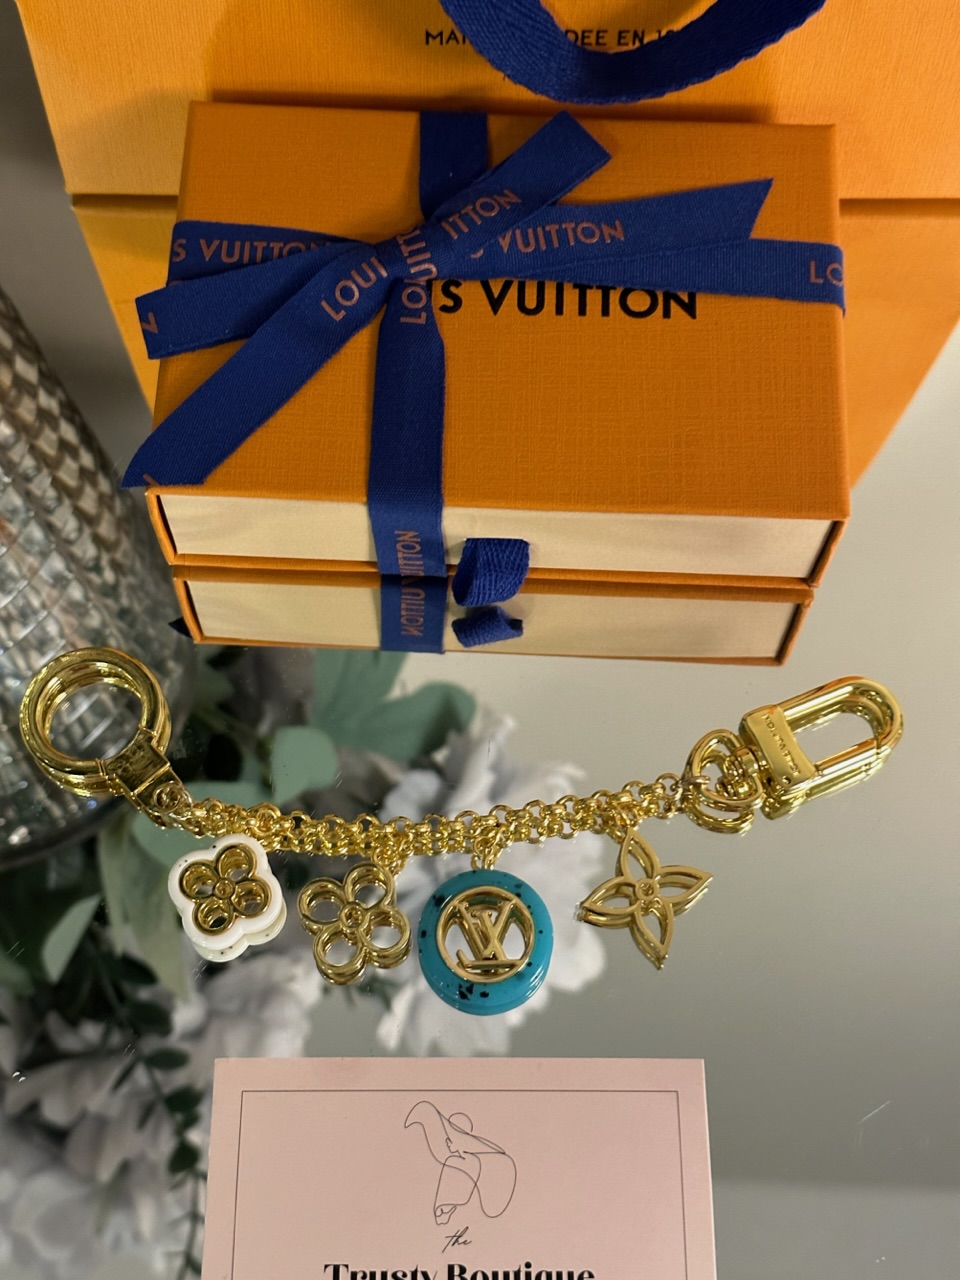 Louis Vuitton Gold & Multicolor Blooming Flowers Bag Charm QJJ05Y17MB002